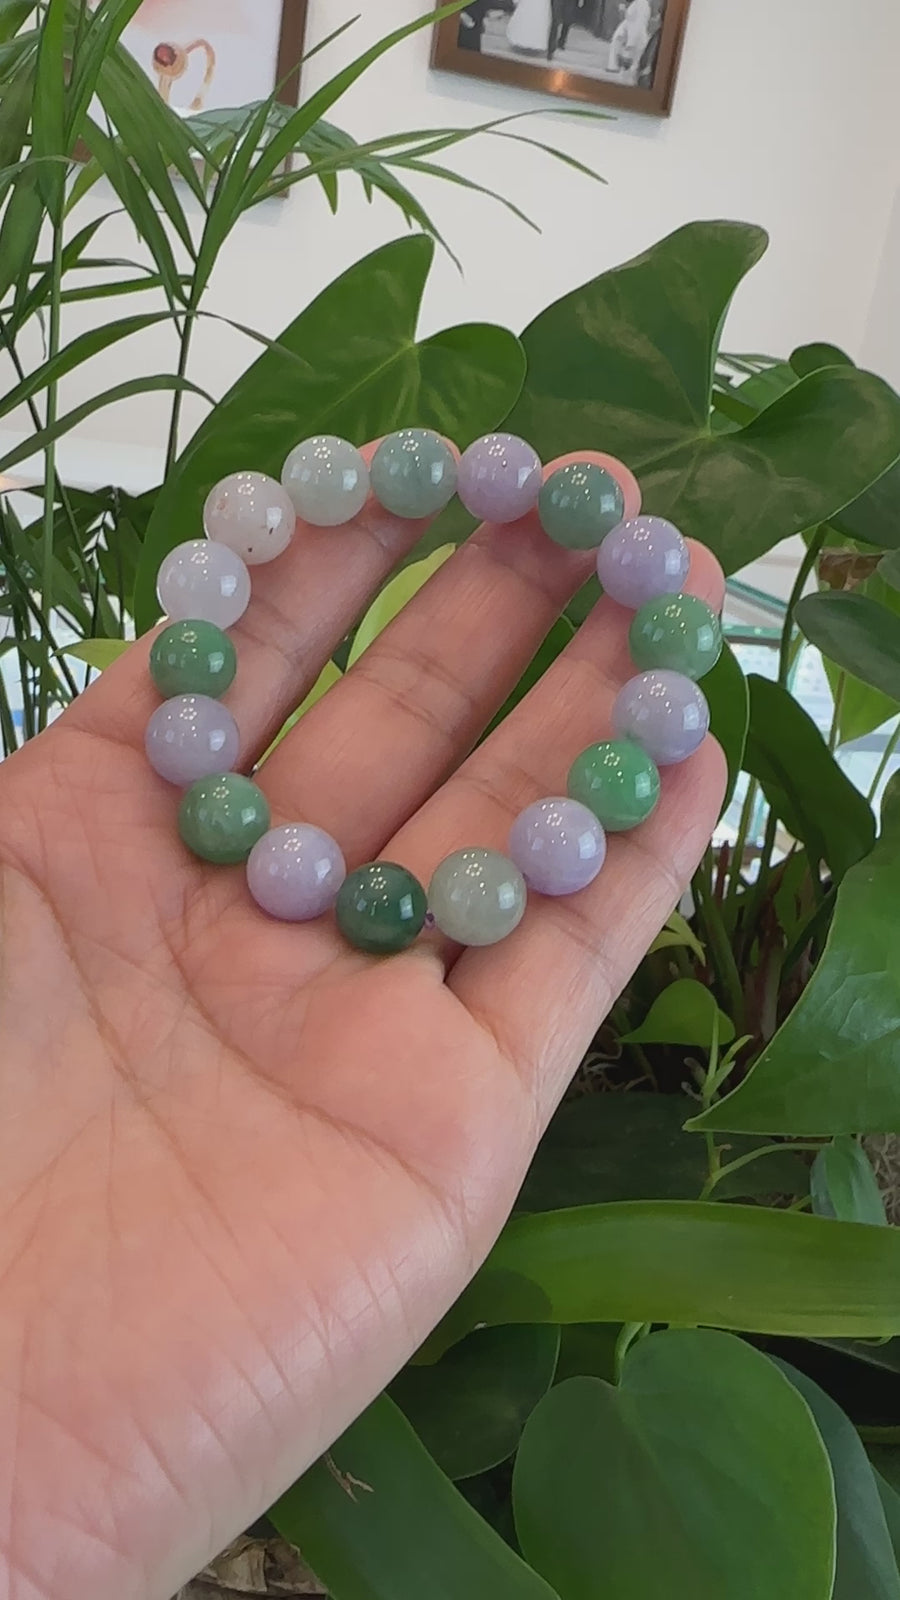 High end Genuine Jadeite Jade Round Multiple Colors Beads Bracelet (12 mm)